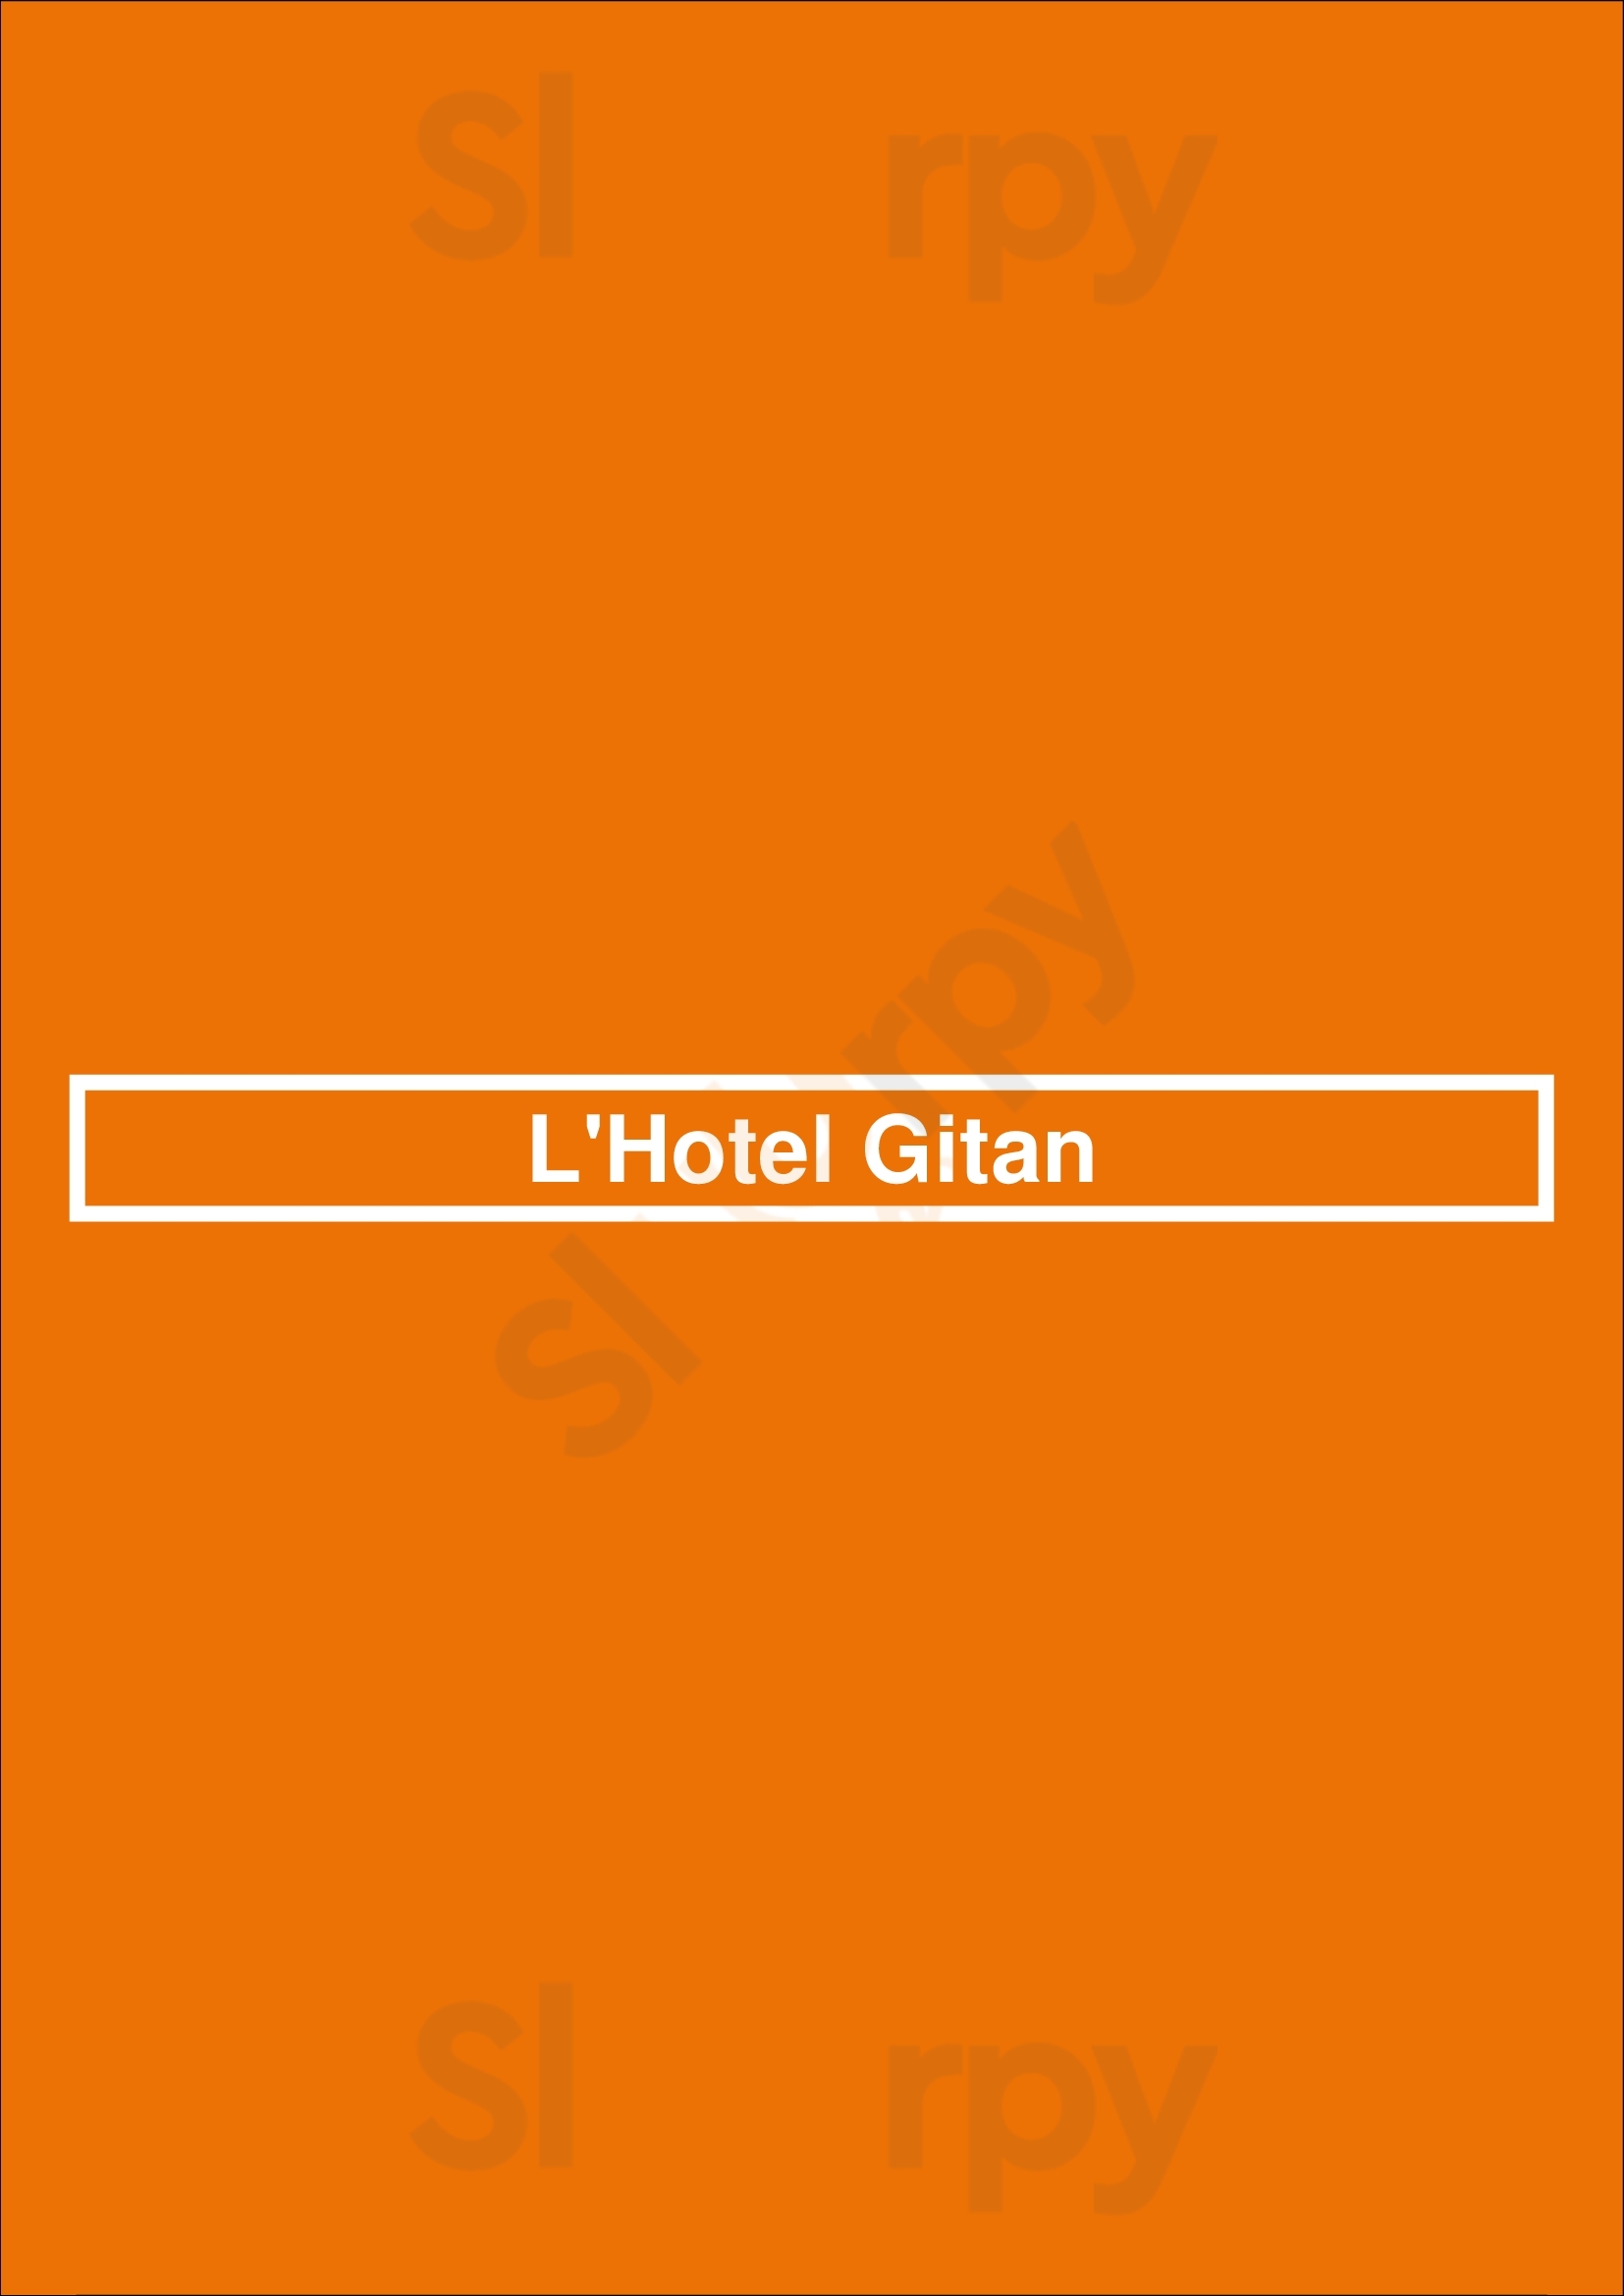 L'hotel Gitan Prahran Menu - 1